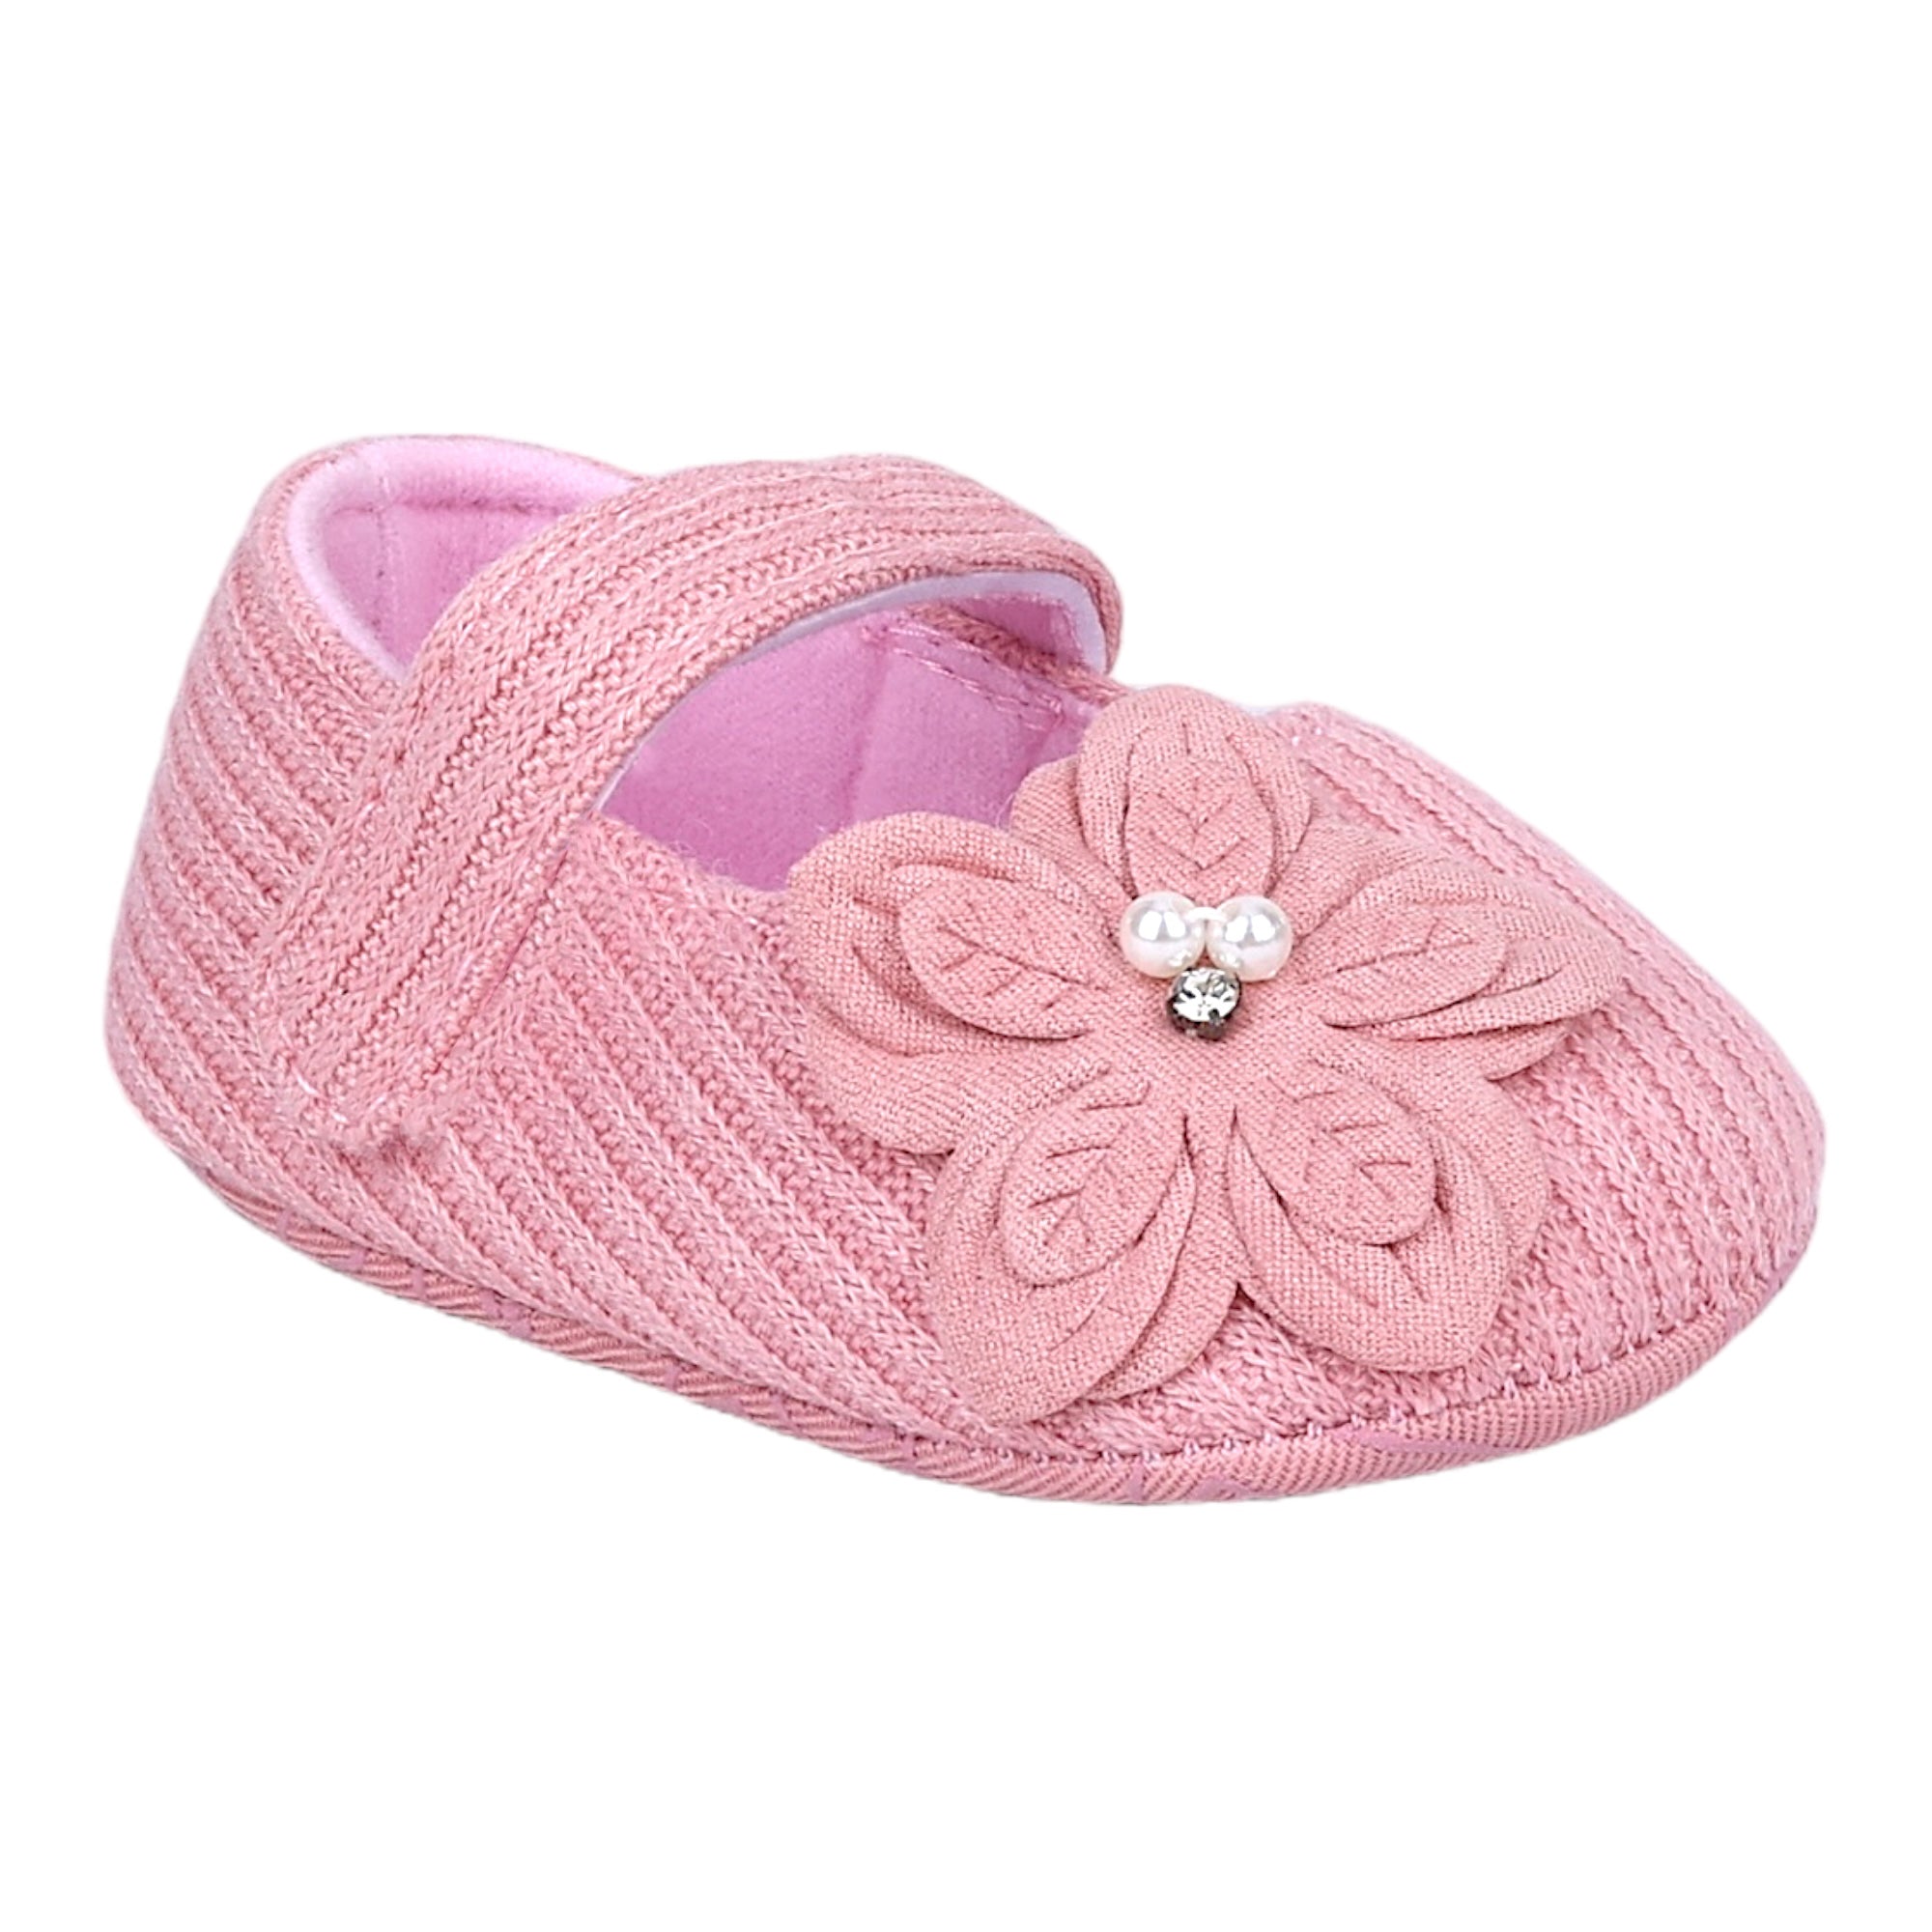 Baby Moo Elegant Embellished Flower Velcro Strap Anti-Skid Ballerina Booties - Pink